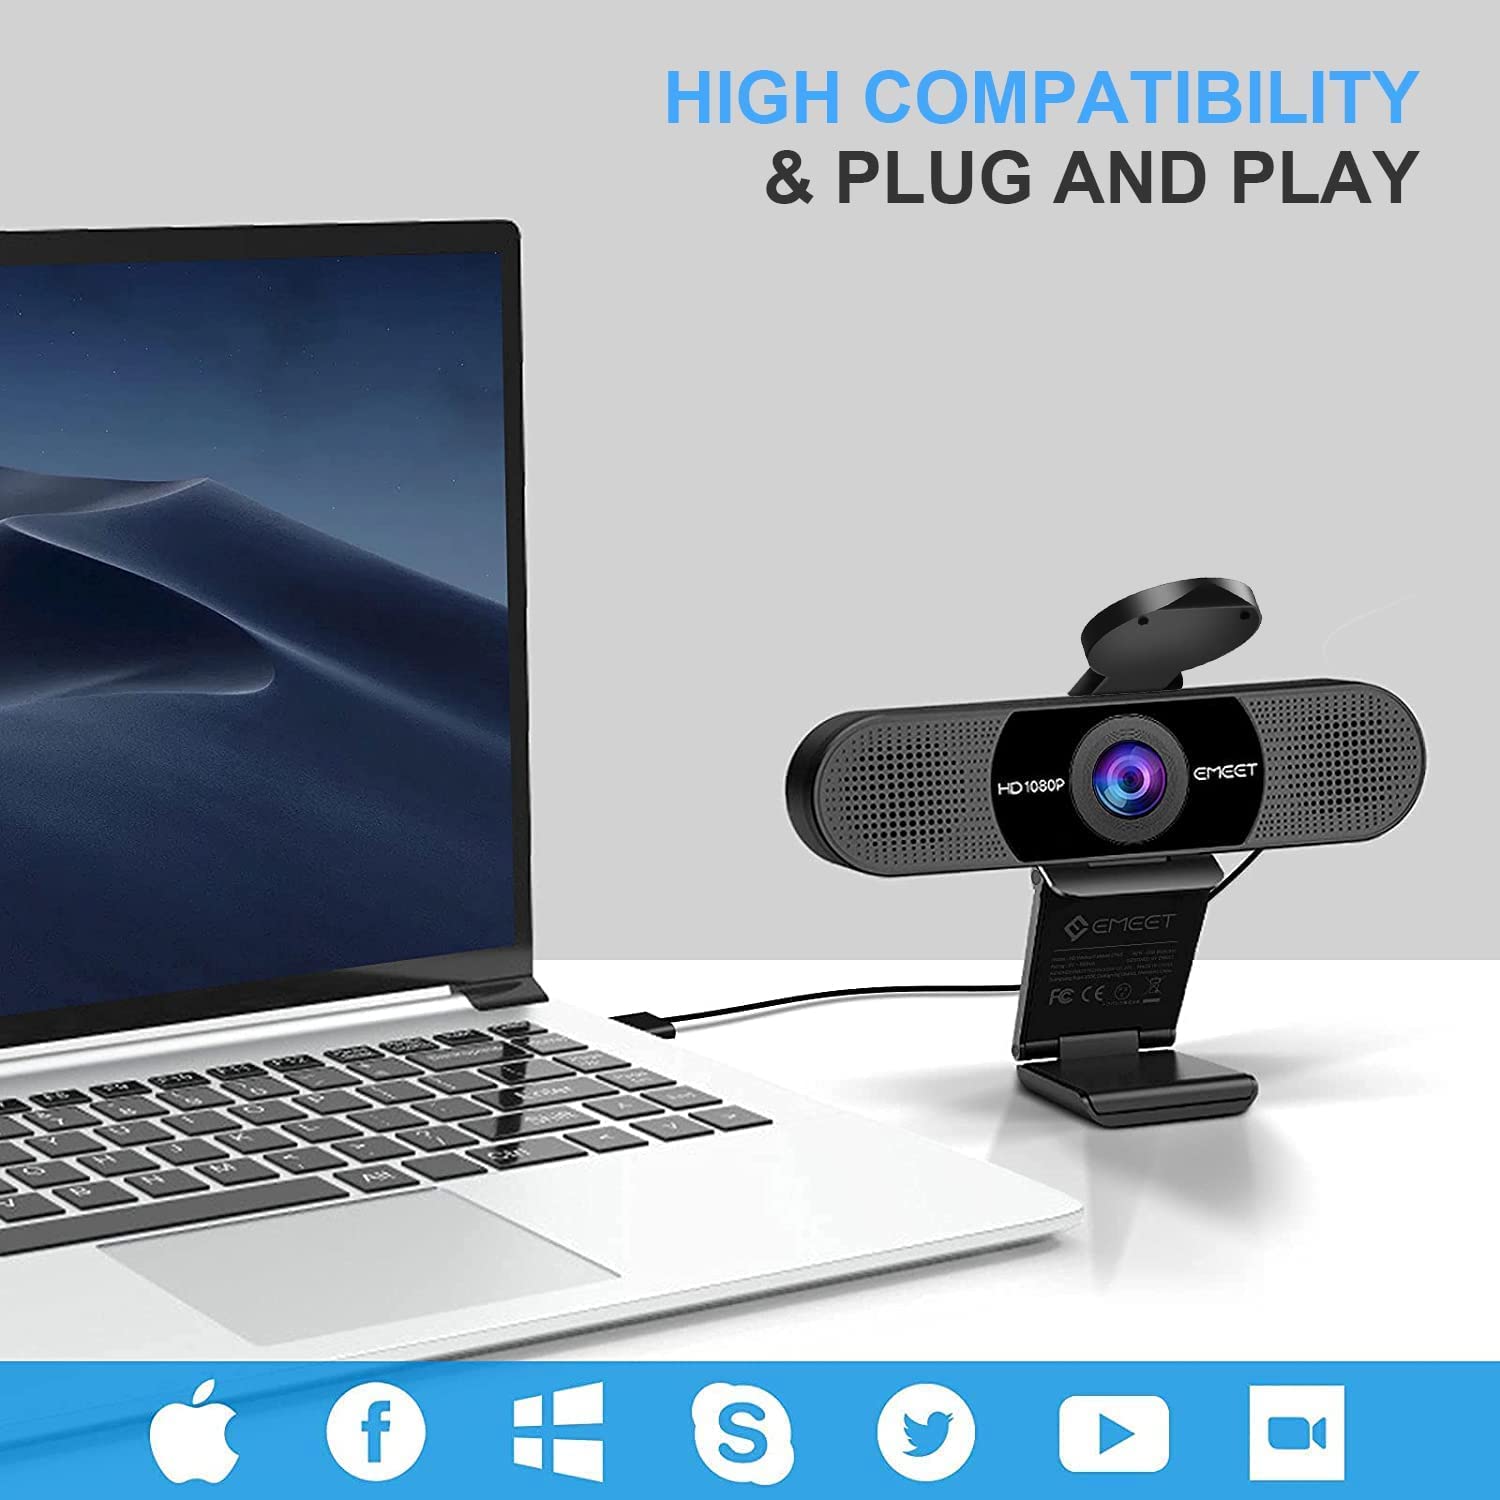 EMEET 1080P Webcam with Microphone C960 Nova 96°FOV Wide Angle Webcam 2 Mics Streaming Webcam with Privacy Cover Plug&Play USB Webcam for Calls/Conference, Zoom/Skype/YouTube, Laptop/Desktop